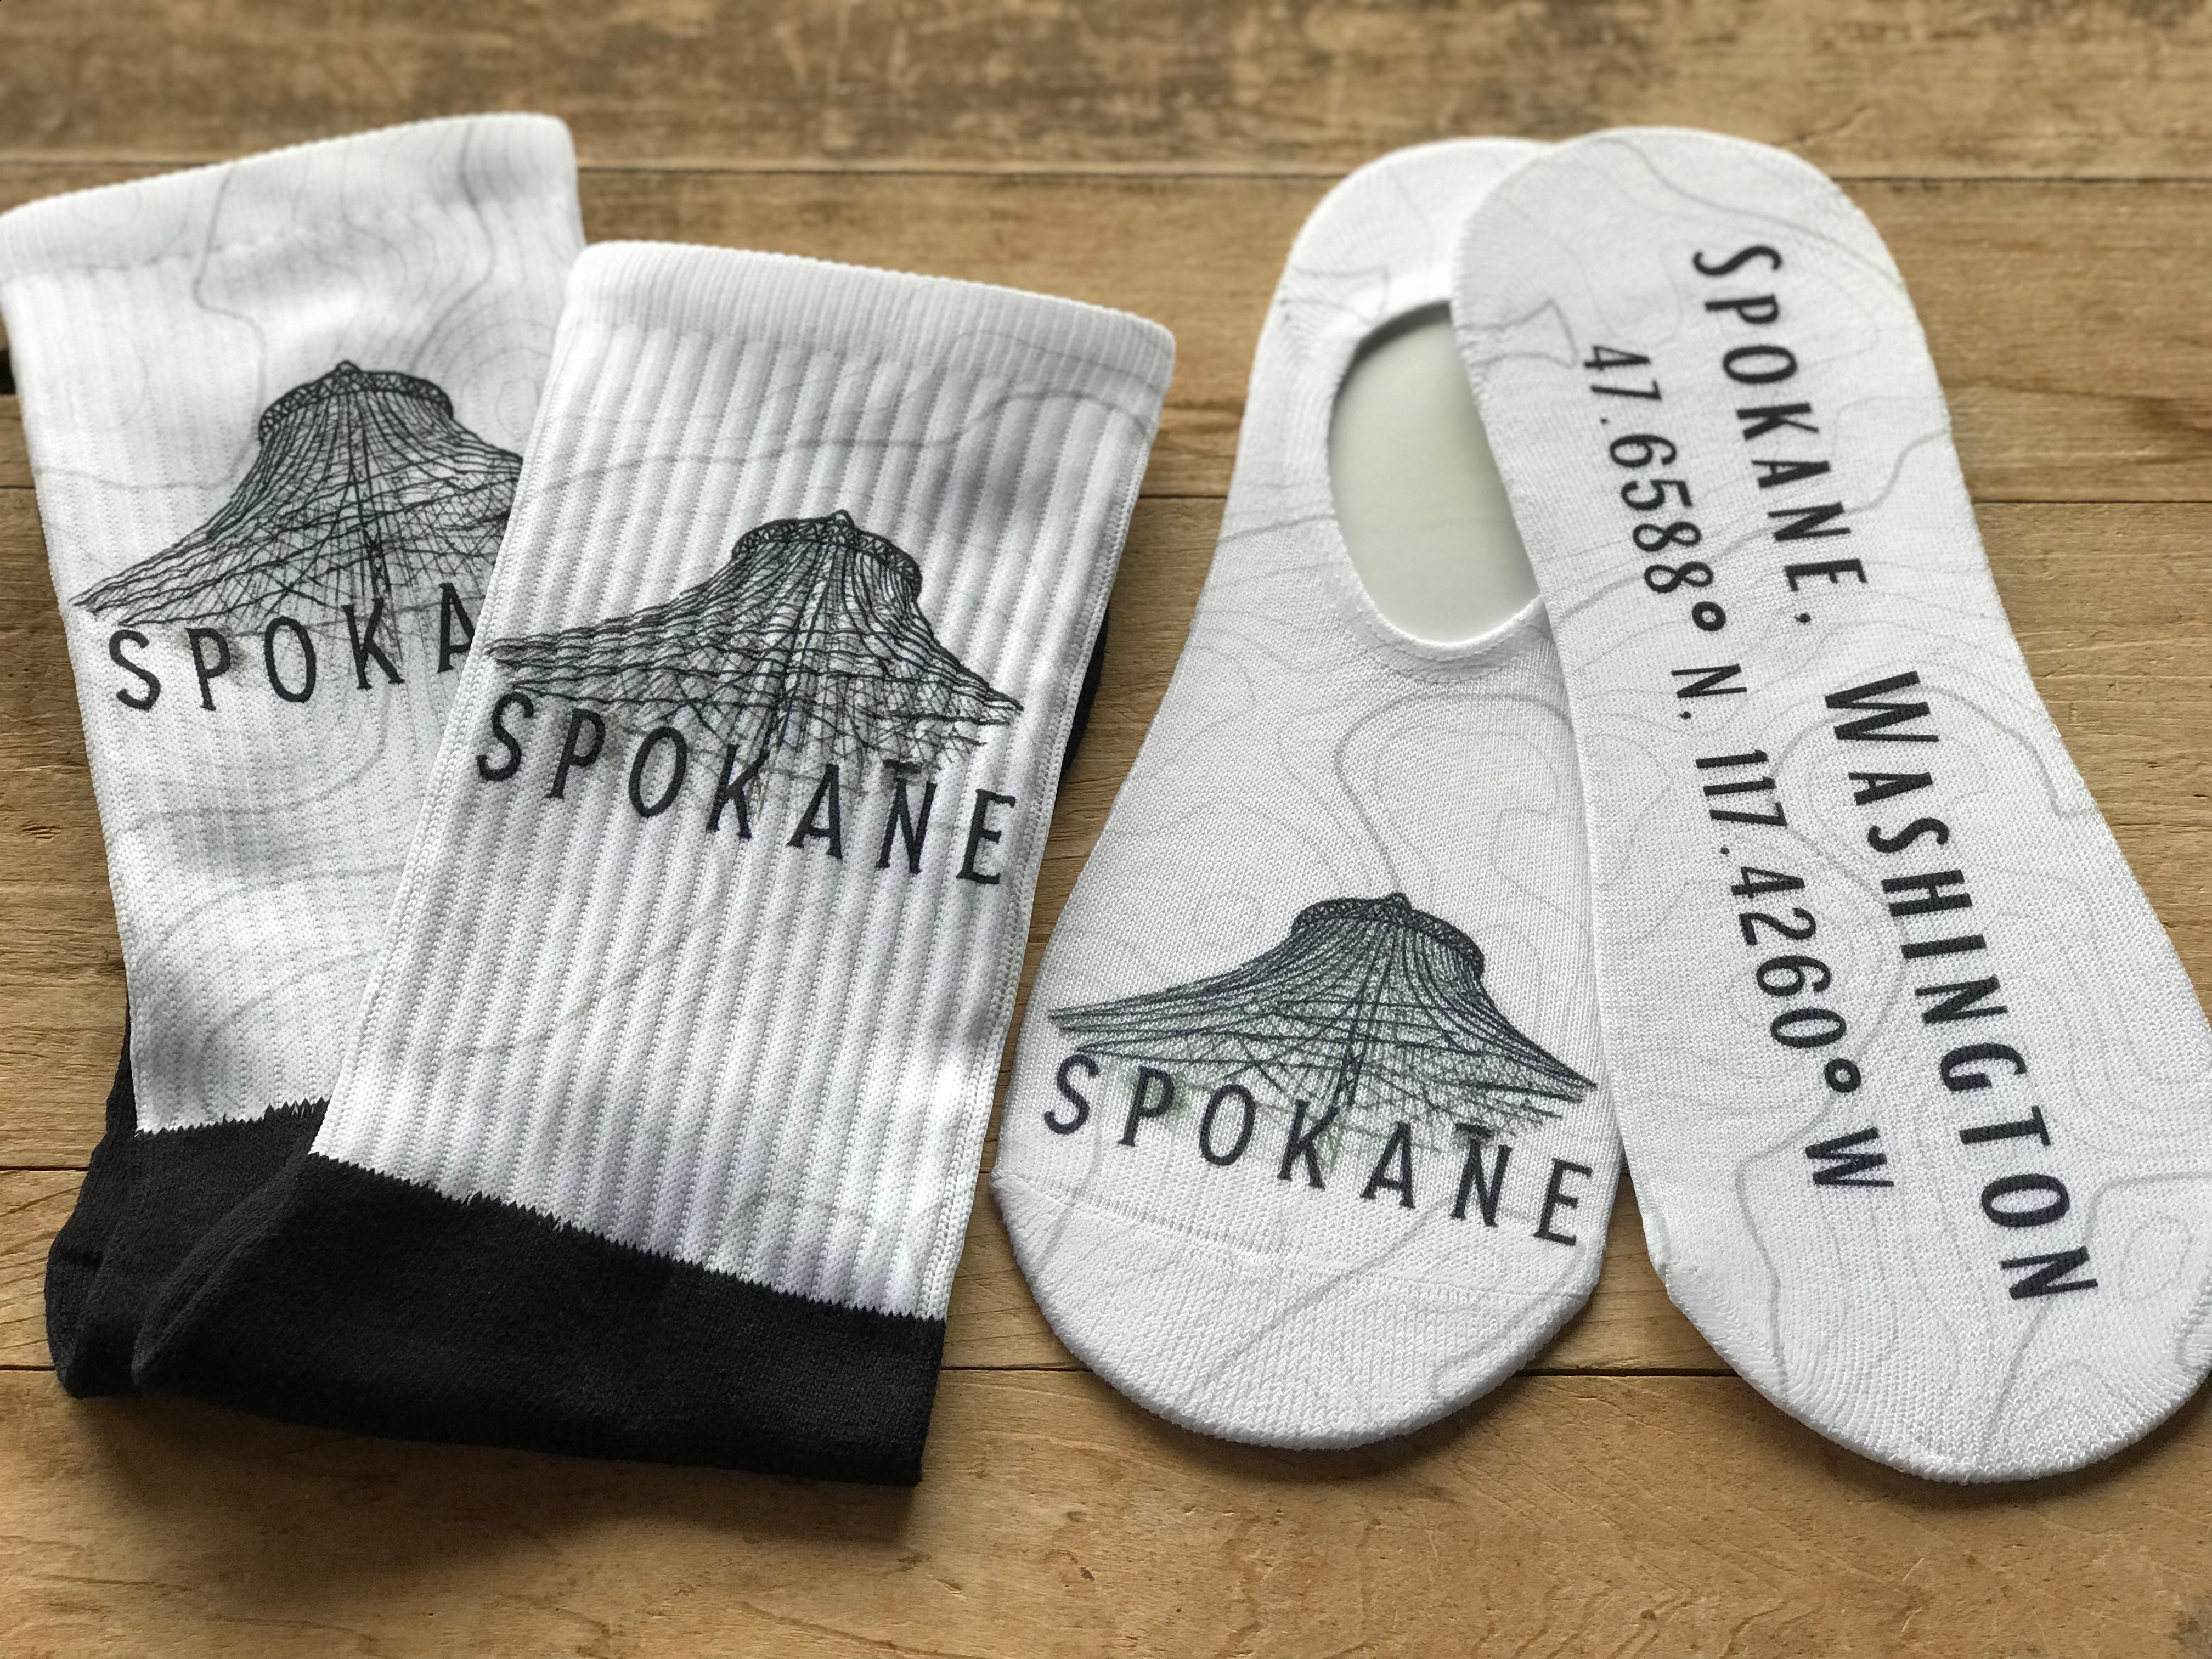 Spokane Pavilion His & Hers Socks